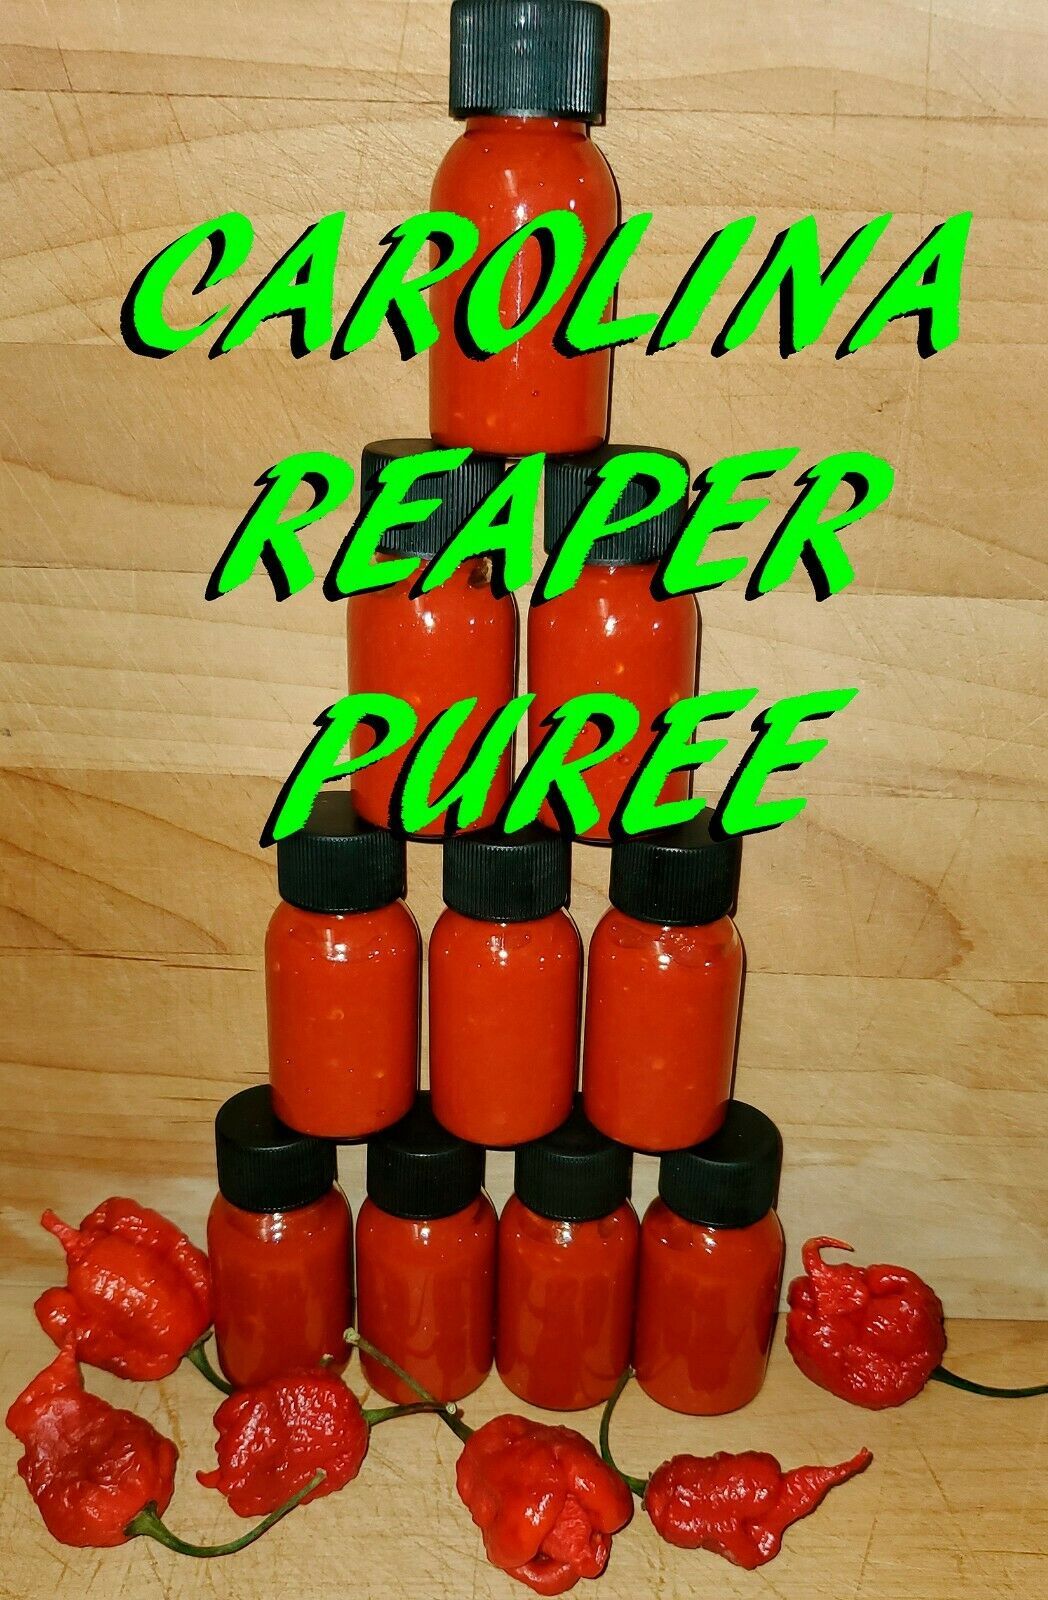 Carolina Reaper/Ghost Pepper/Moruga/Habanero various Purees available! 1 ounce  - $4.75 - $9.25